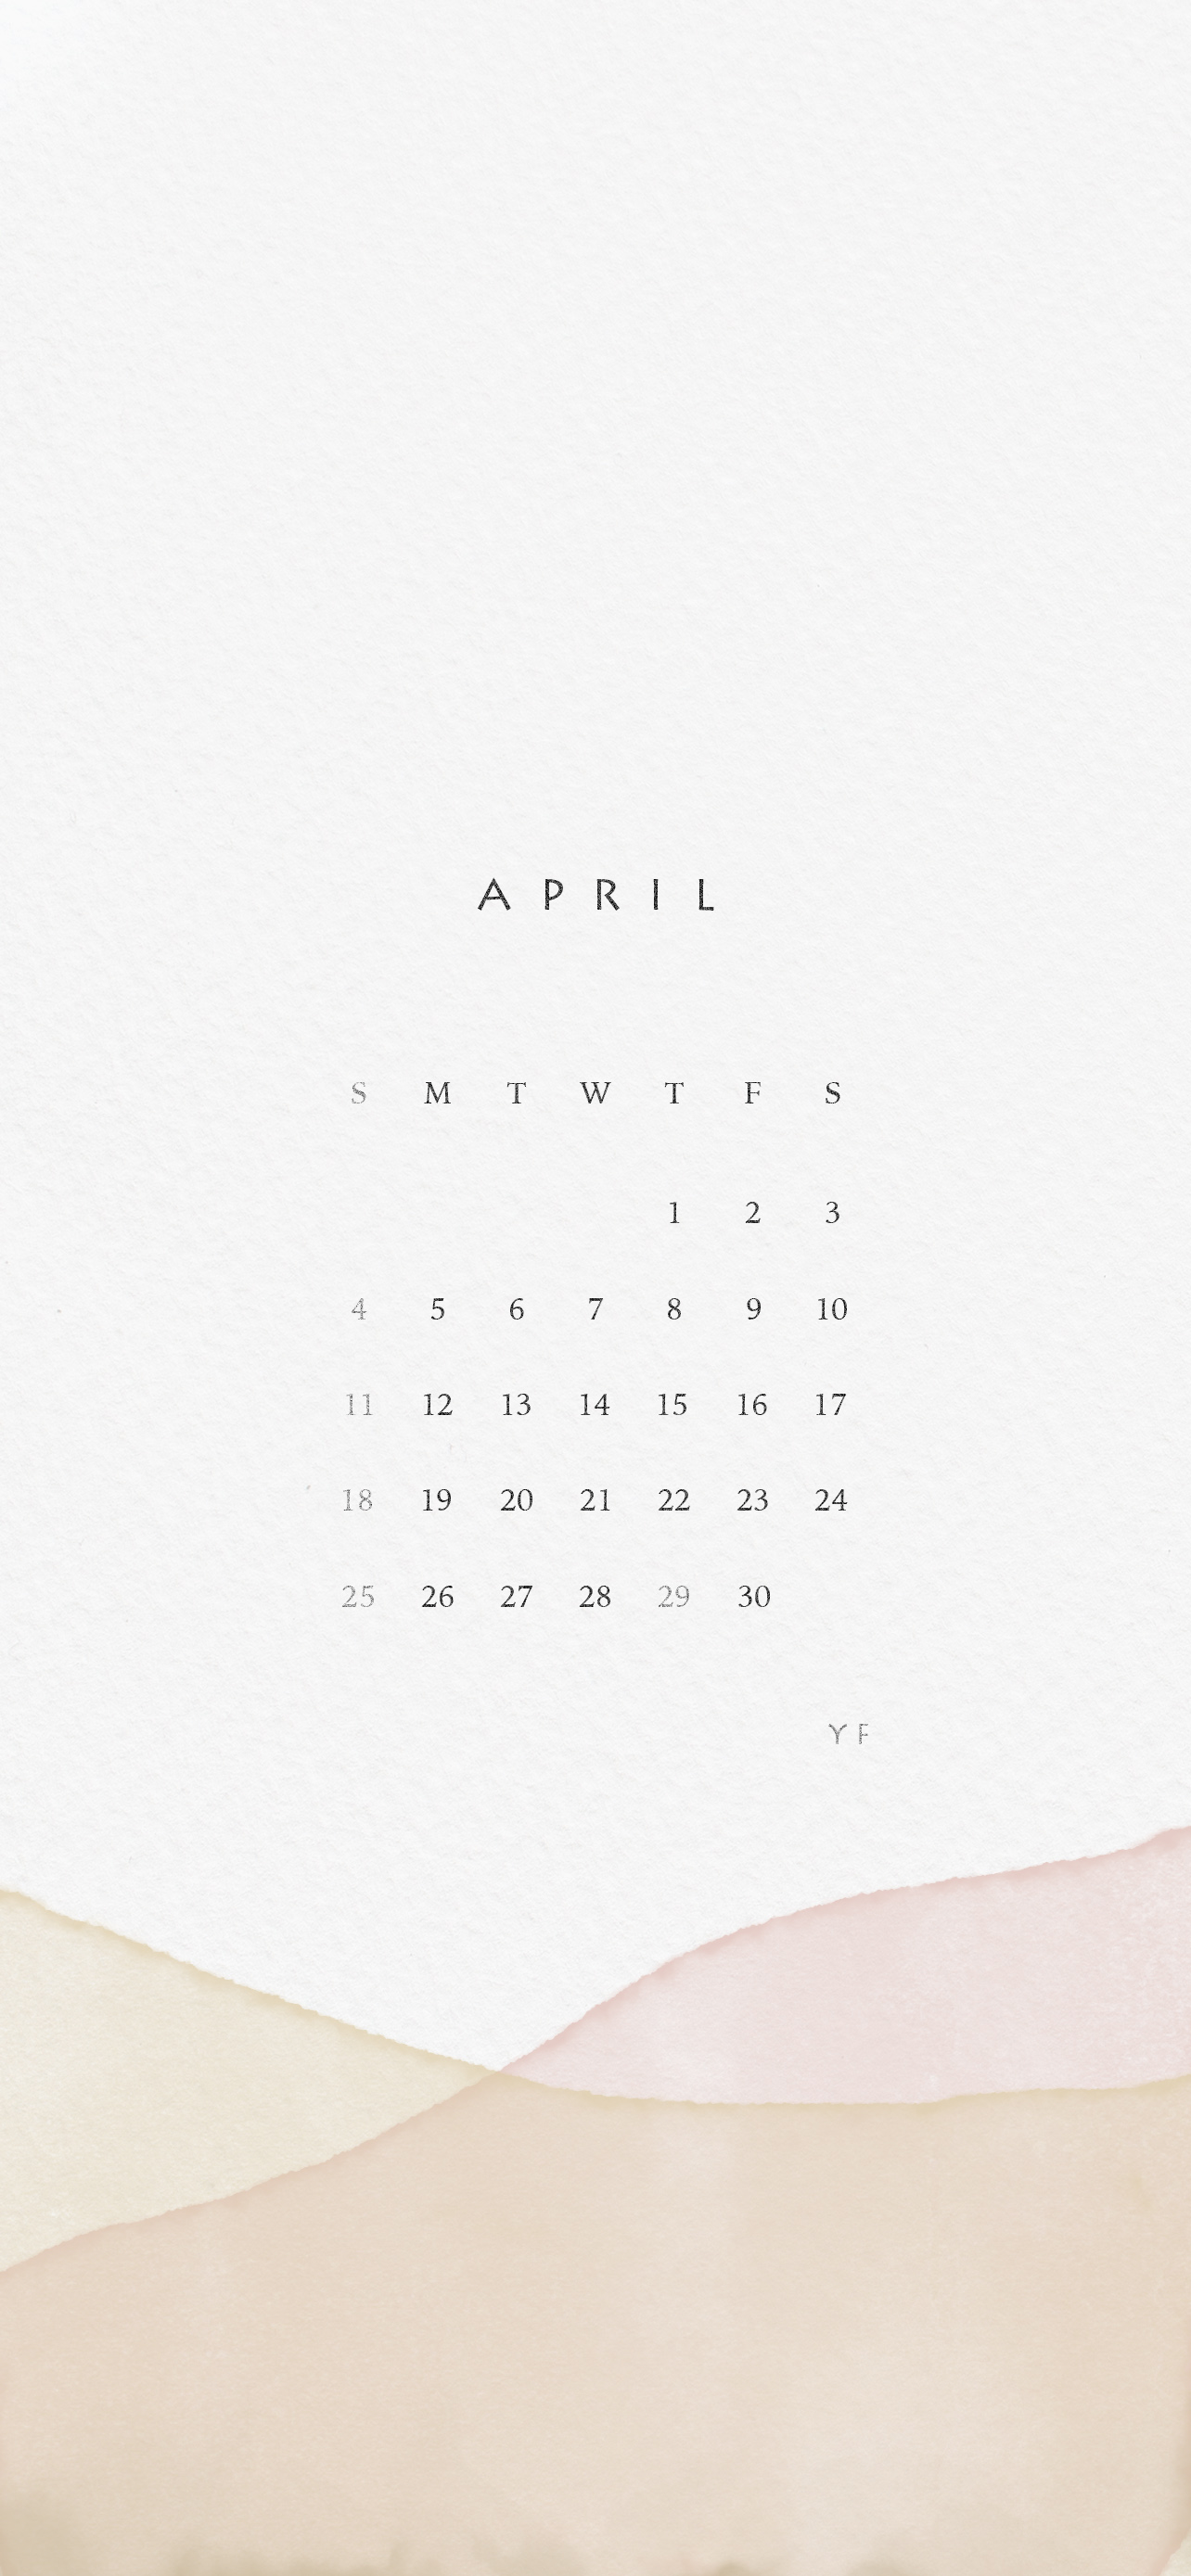 April 2021 Calendar Wallpaper For The Iphone Design By Yf